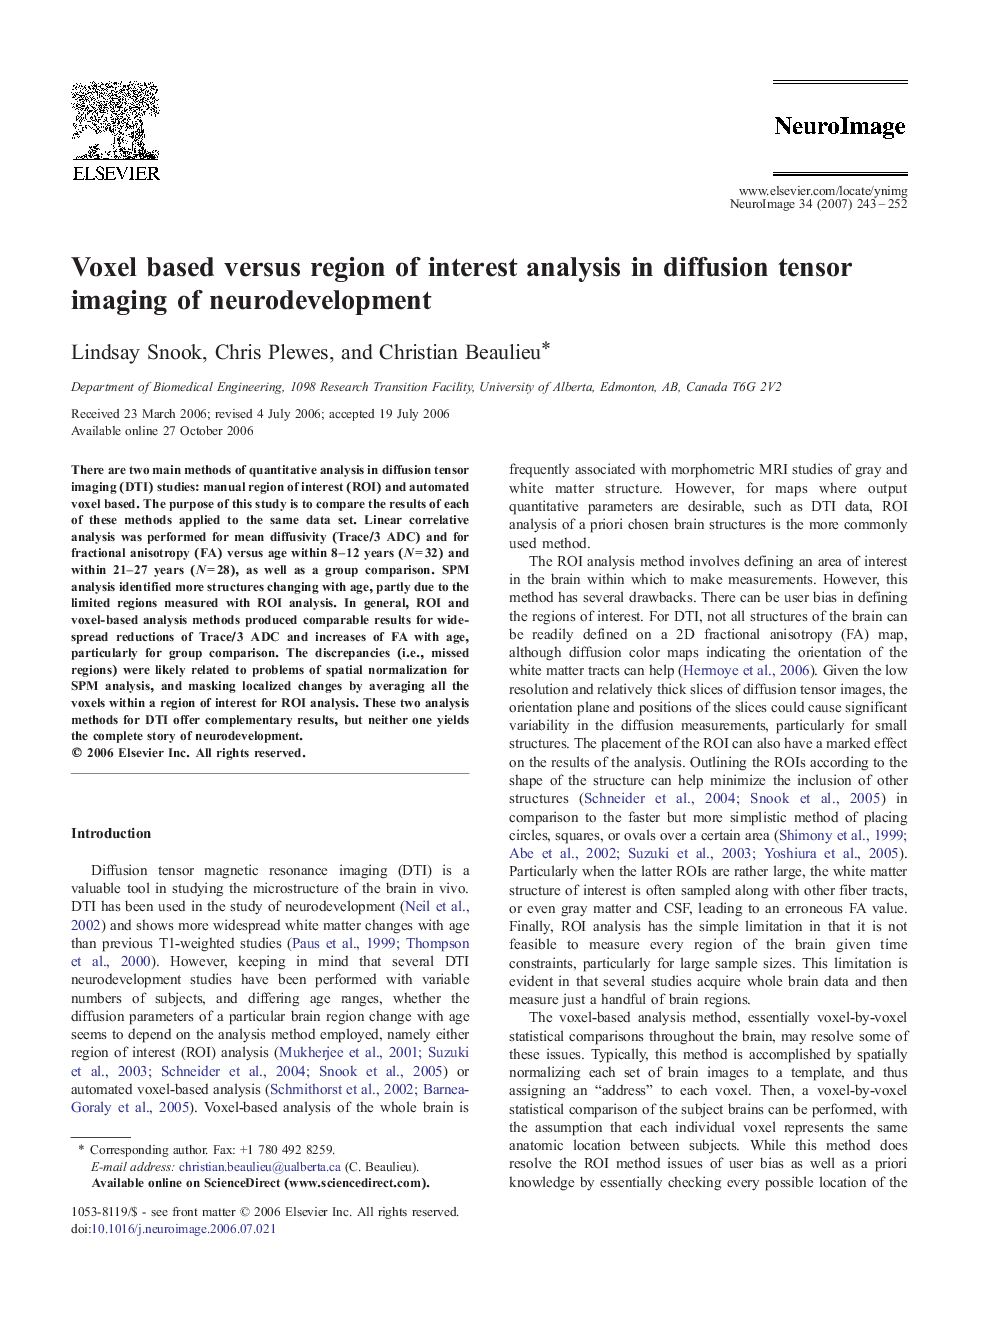 Voxel based versus region of interest analysis in diffusion tensor imaging of neurodevelopment